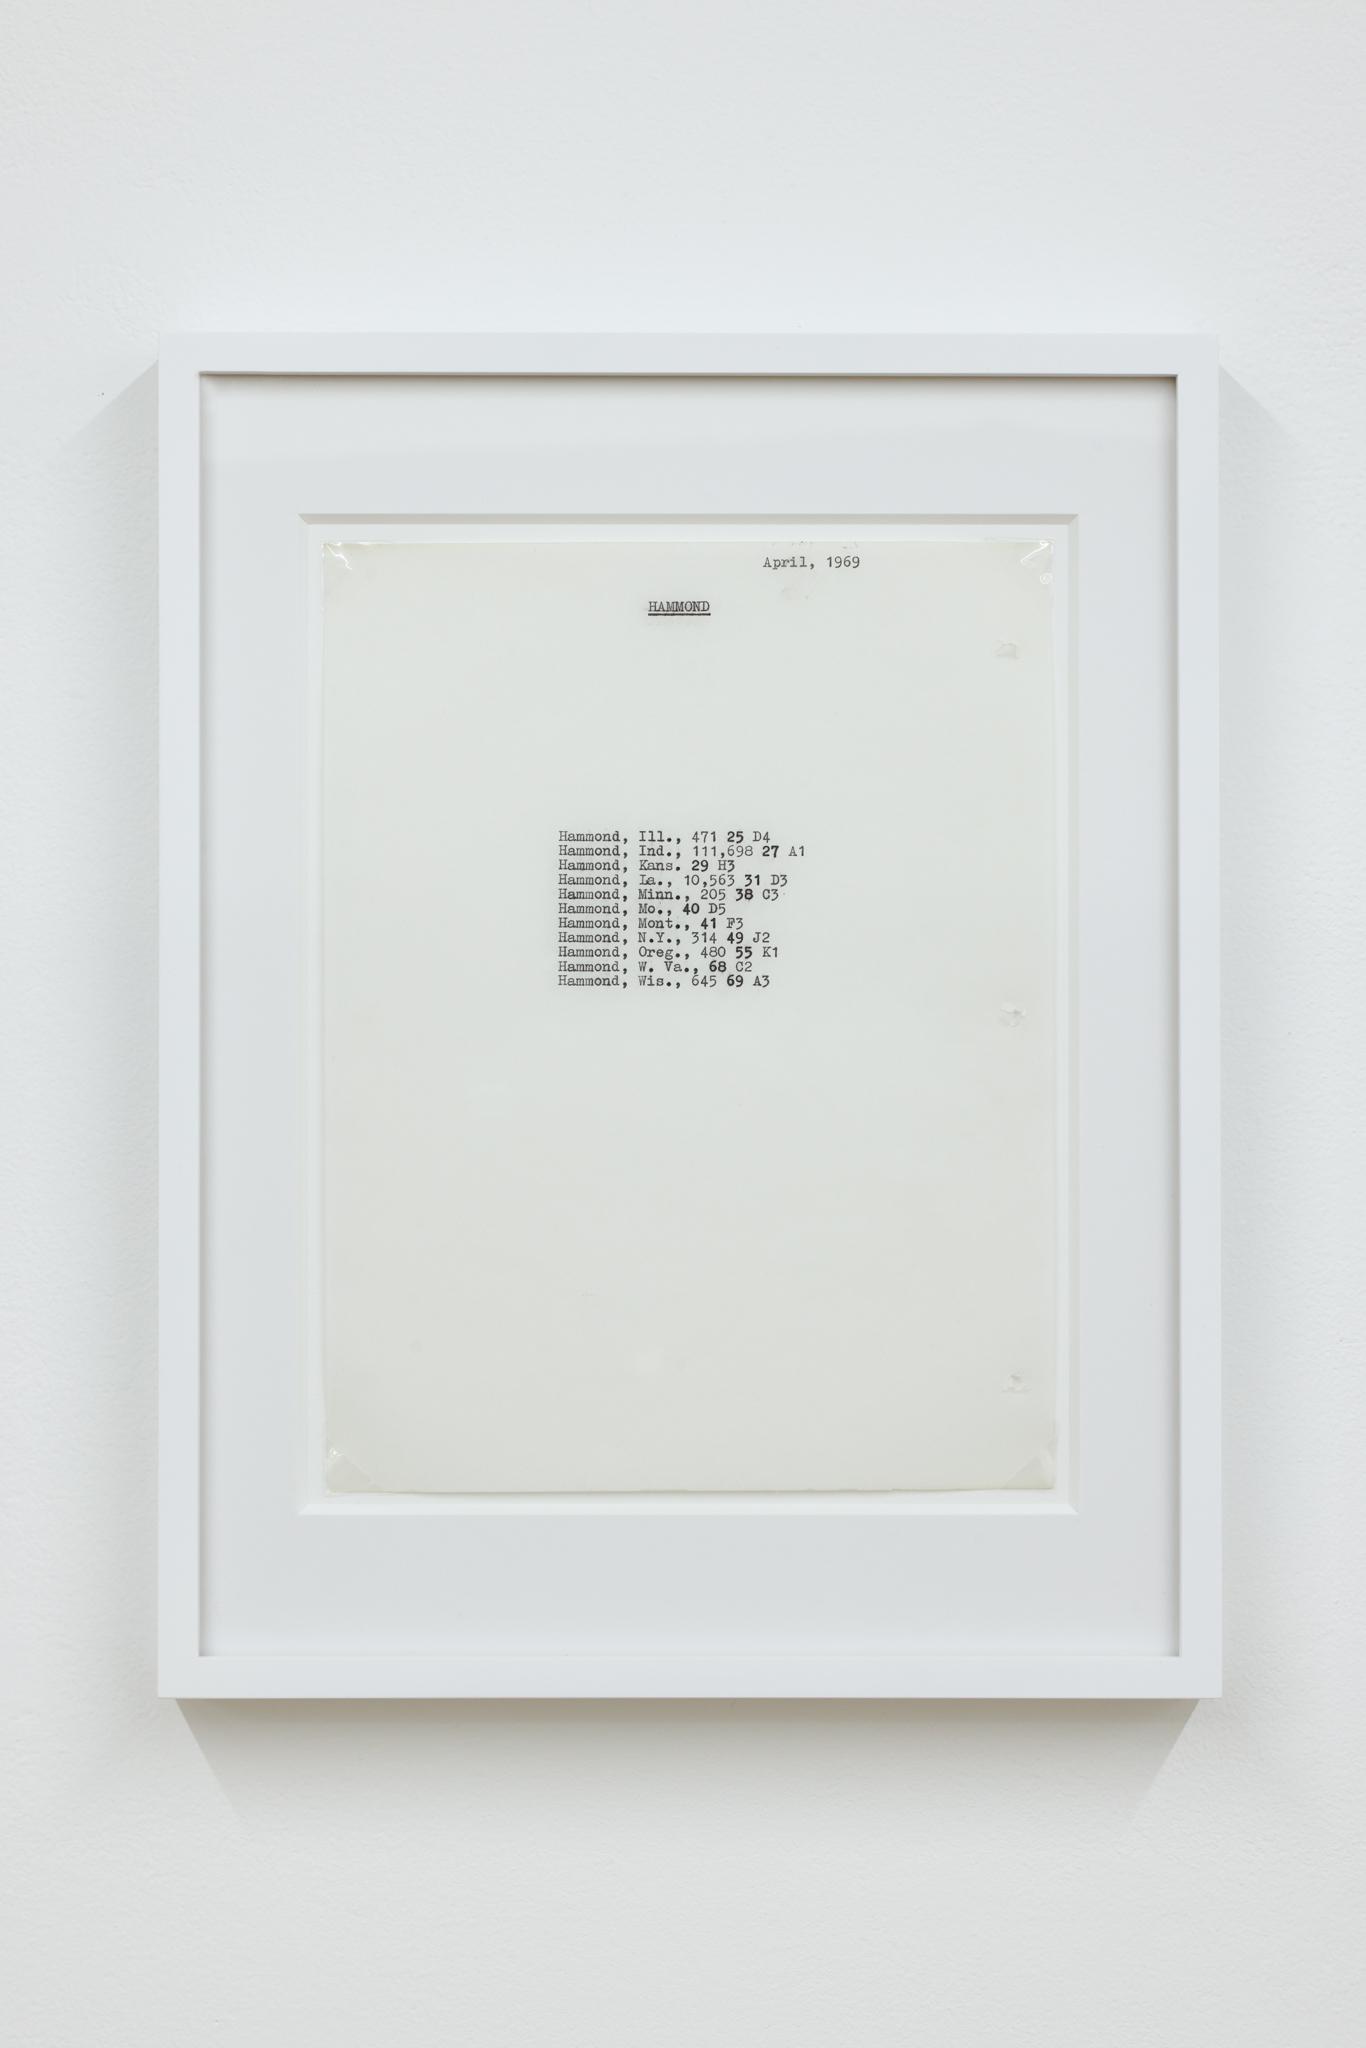 a framed typewritten paper